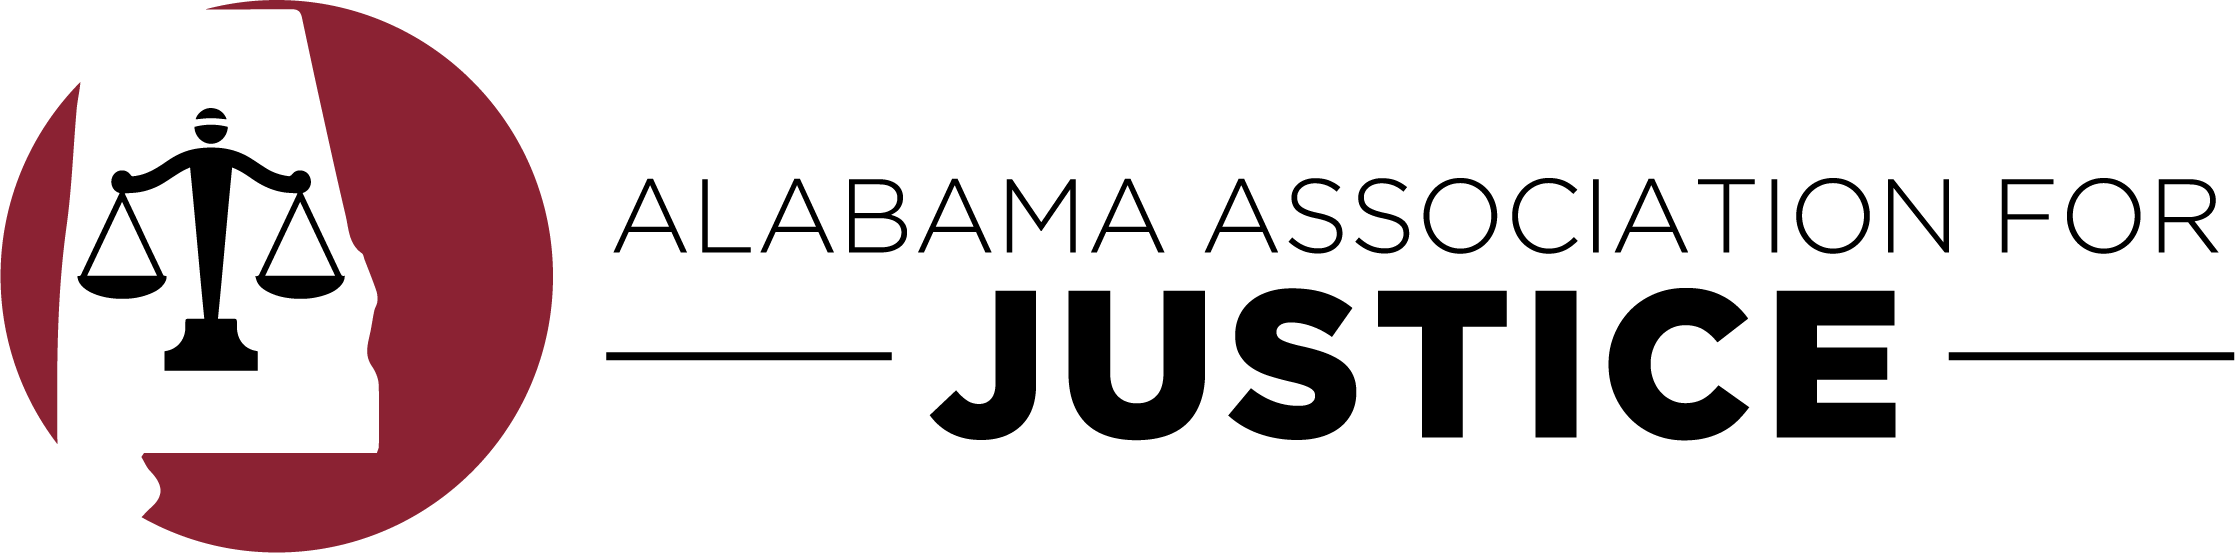 alabama association for justice logo